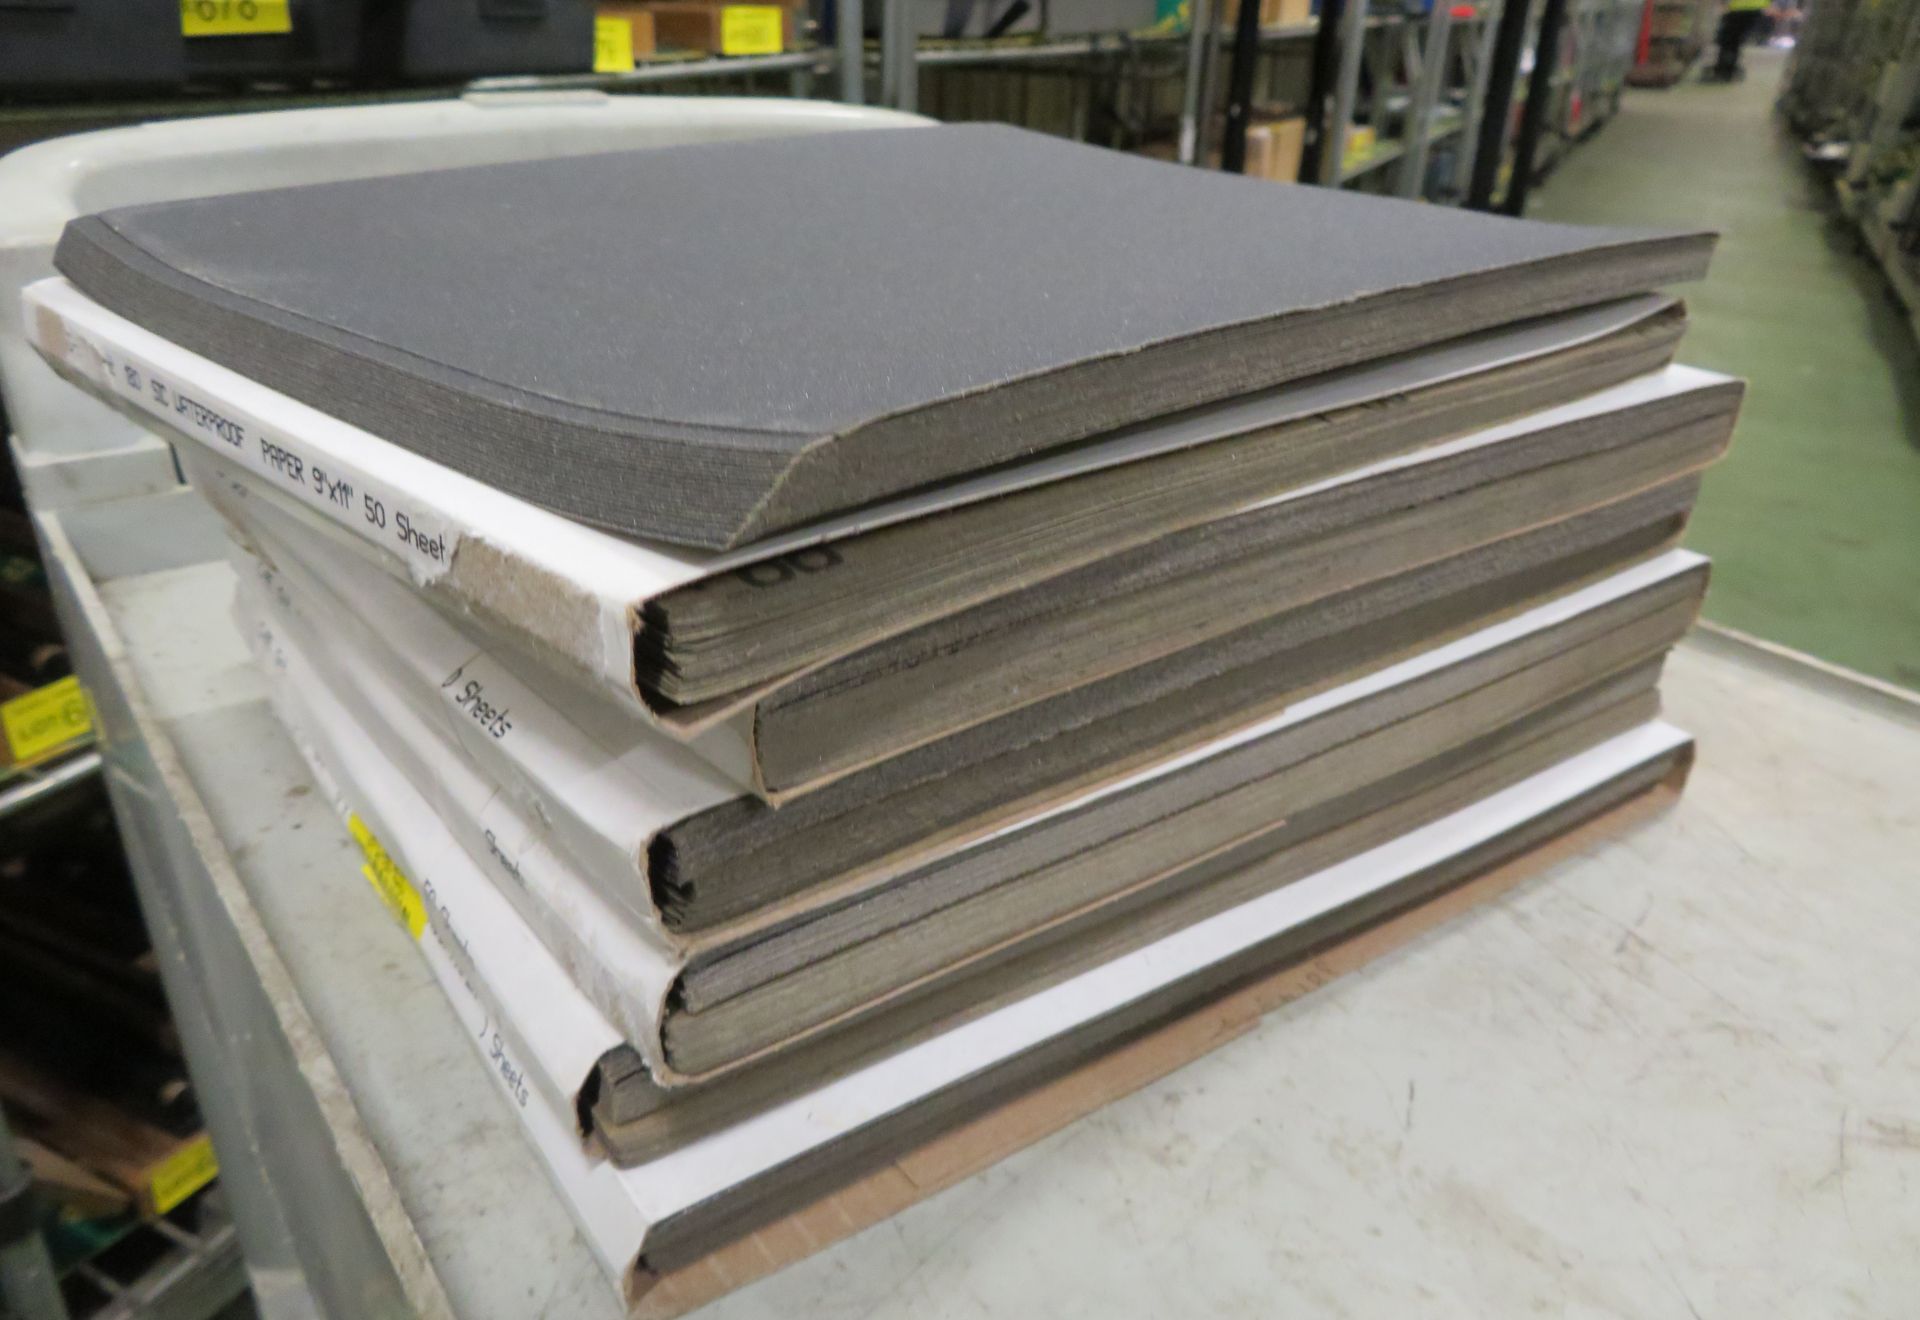 7x Packs of MSC S/C Wet/Dry Grit 180 Abrasive Paper Sheets - Image 2 of 2